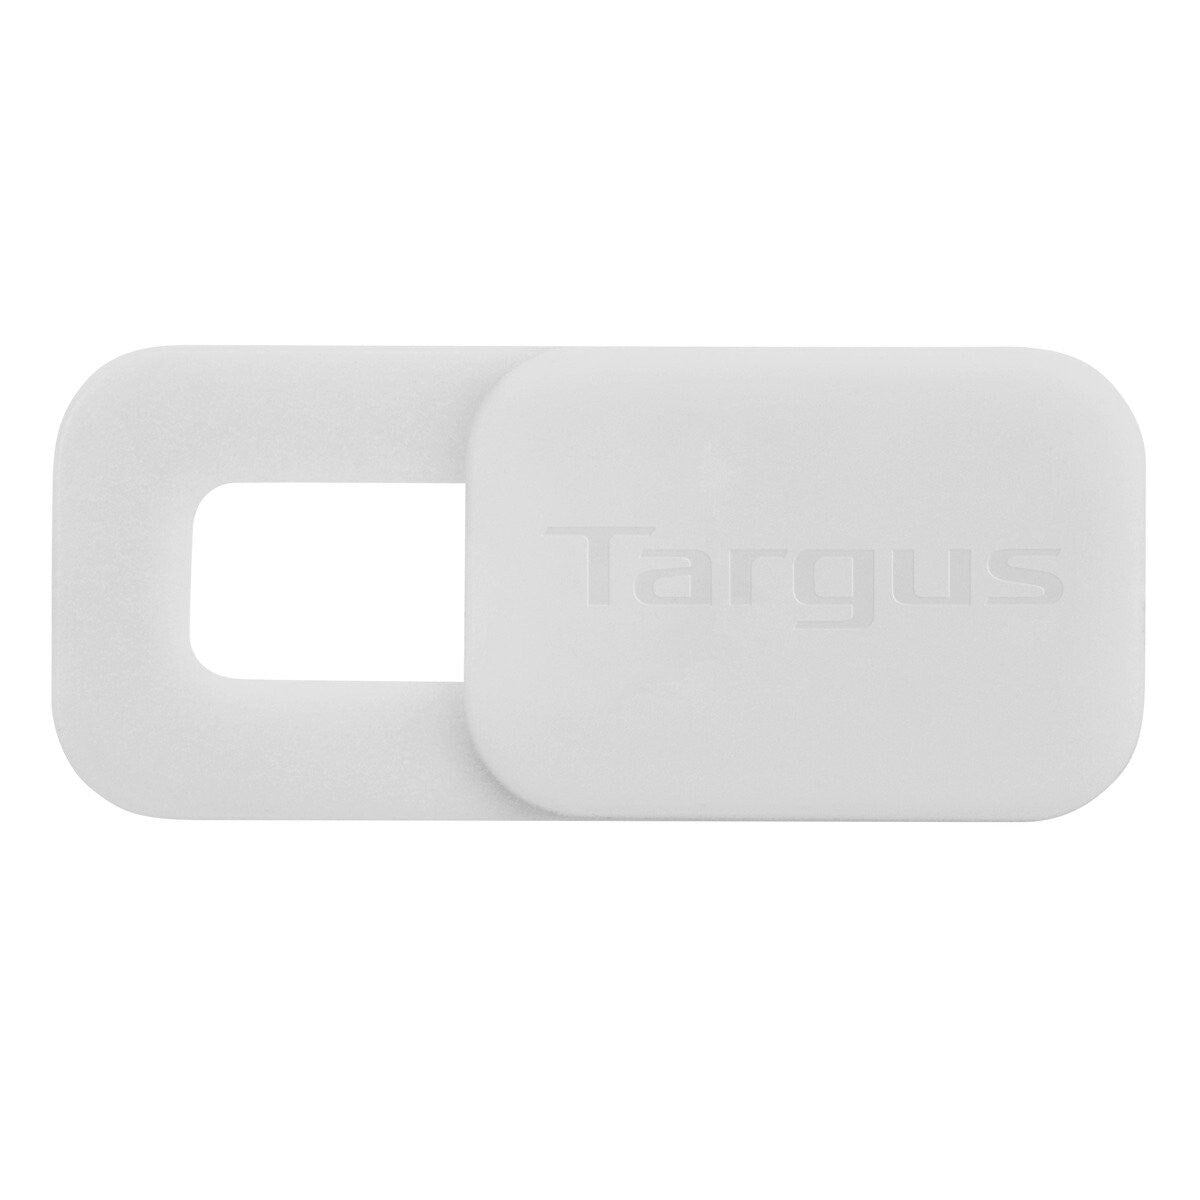 Kryt na webkameru Targus (AWH025GL)